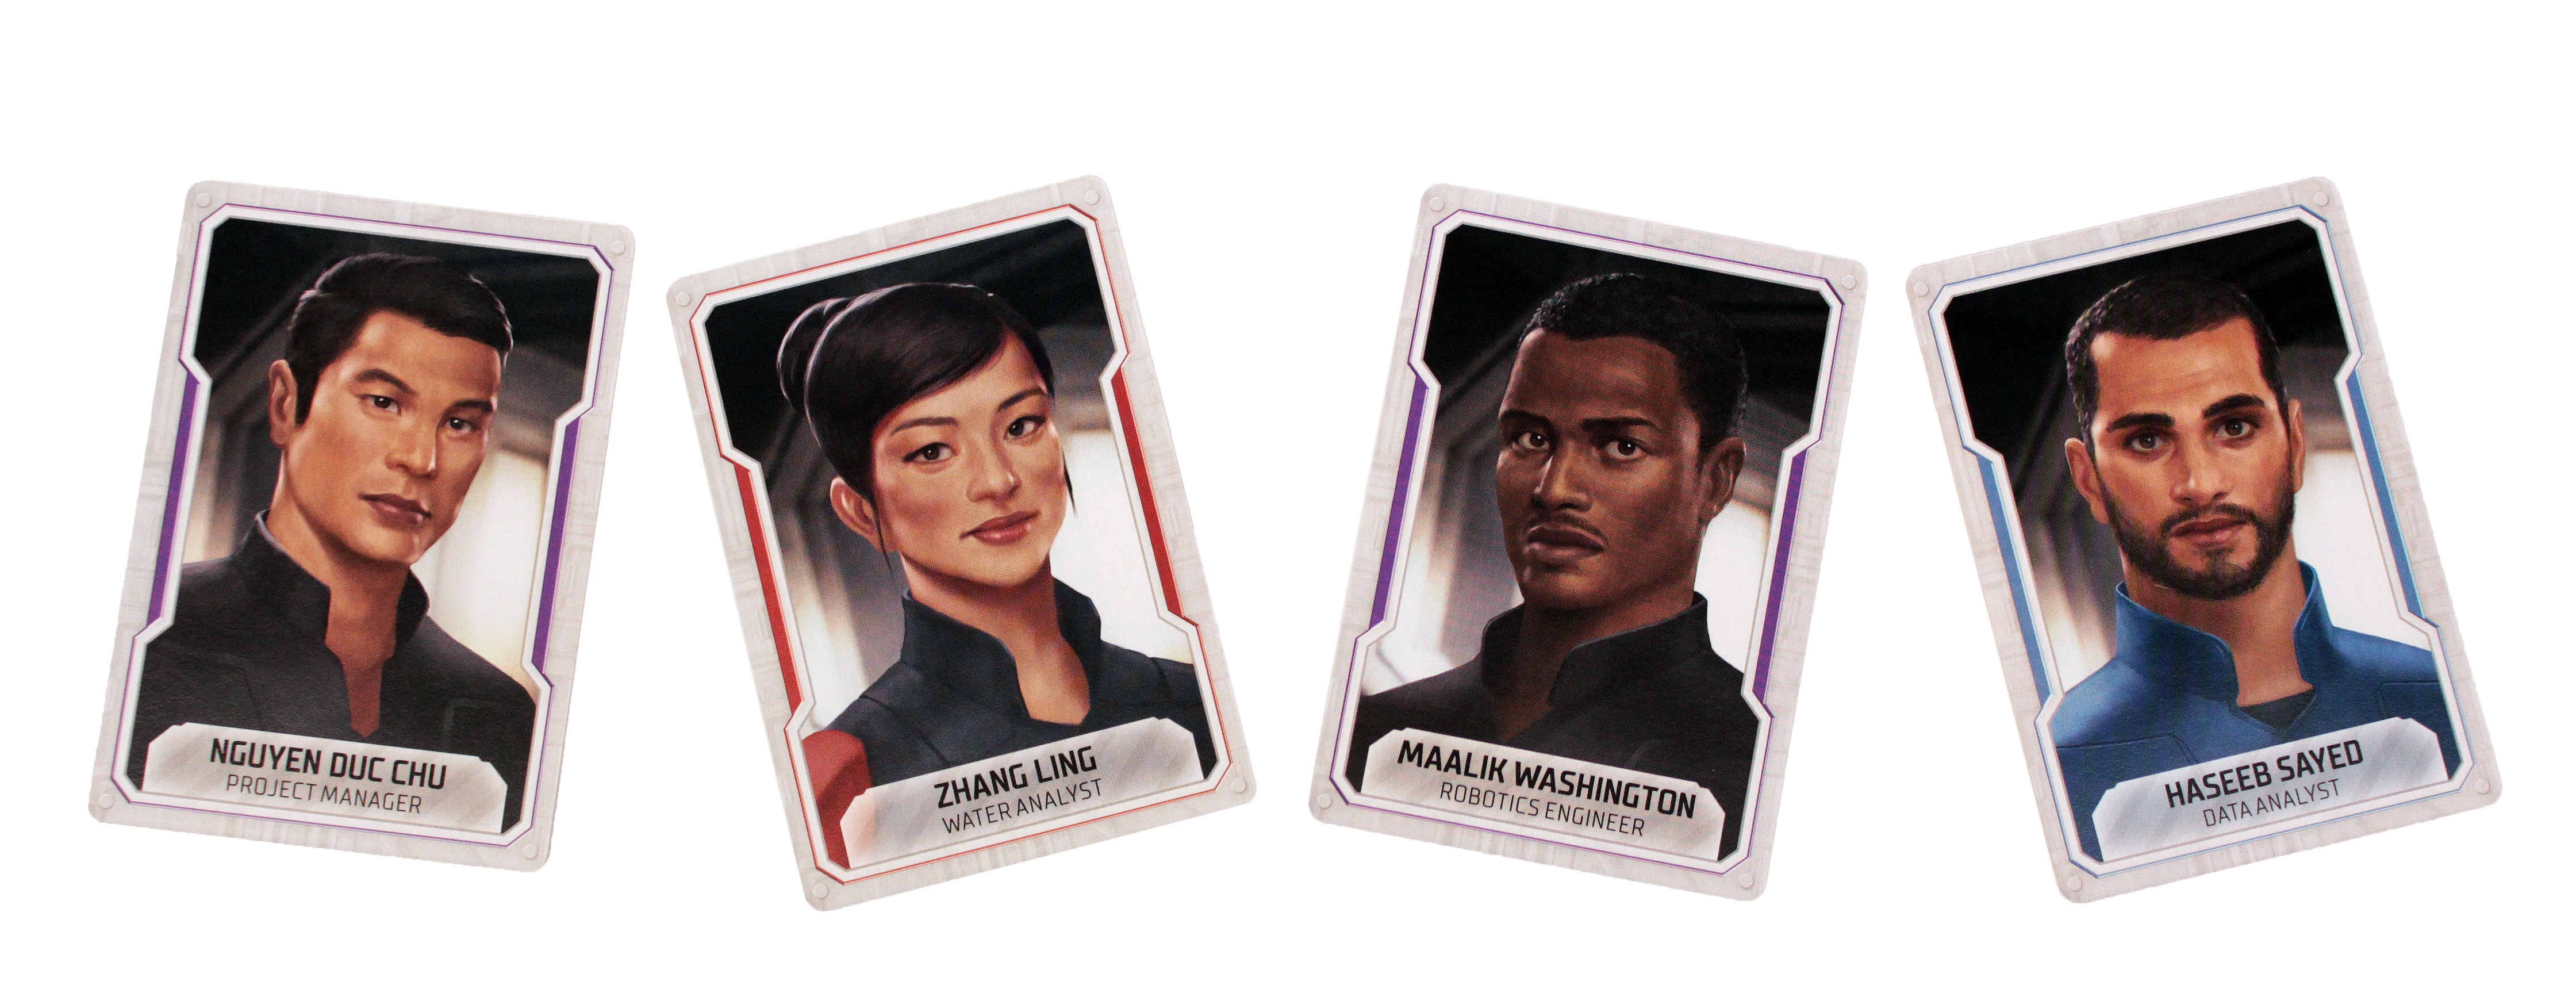 four character tokens, bearing the names and illustrations of the game characters 'Nguyen Duc Chu', 'Zhang Ling', 'Maalik Washington', and 'Haseeb Sayed'